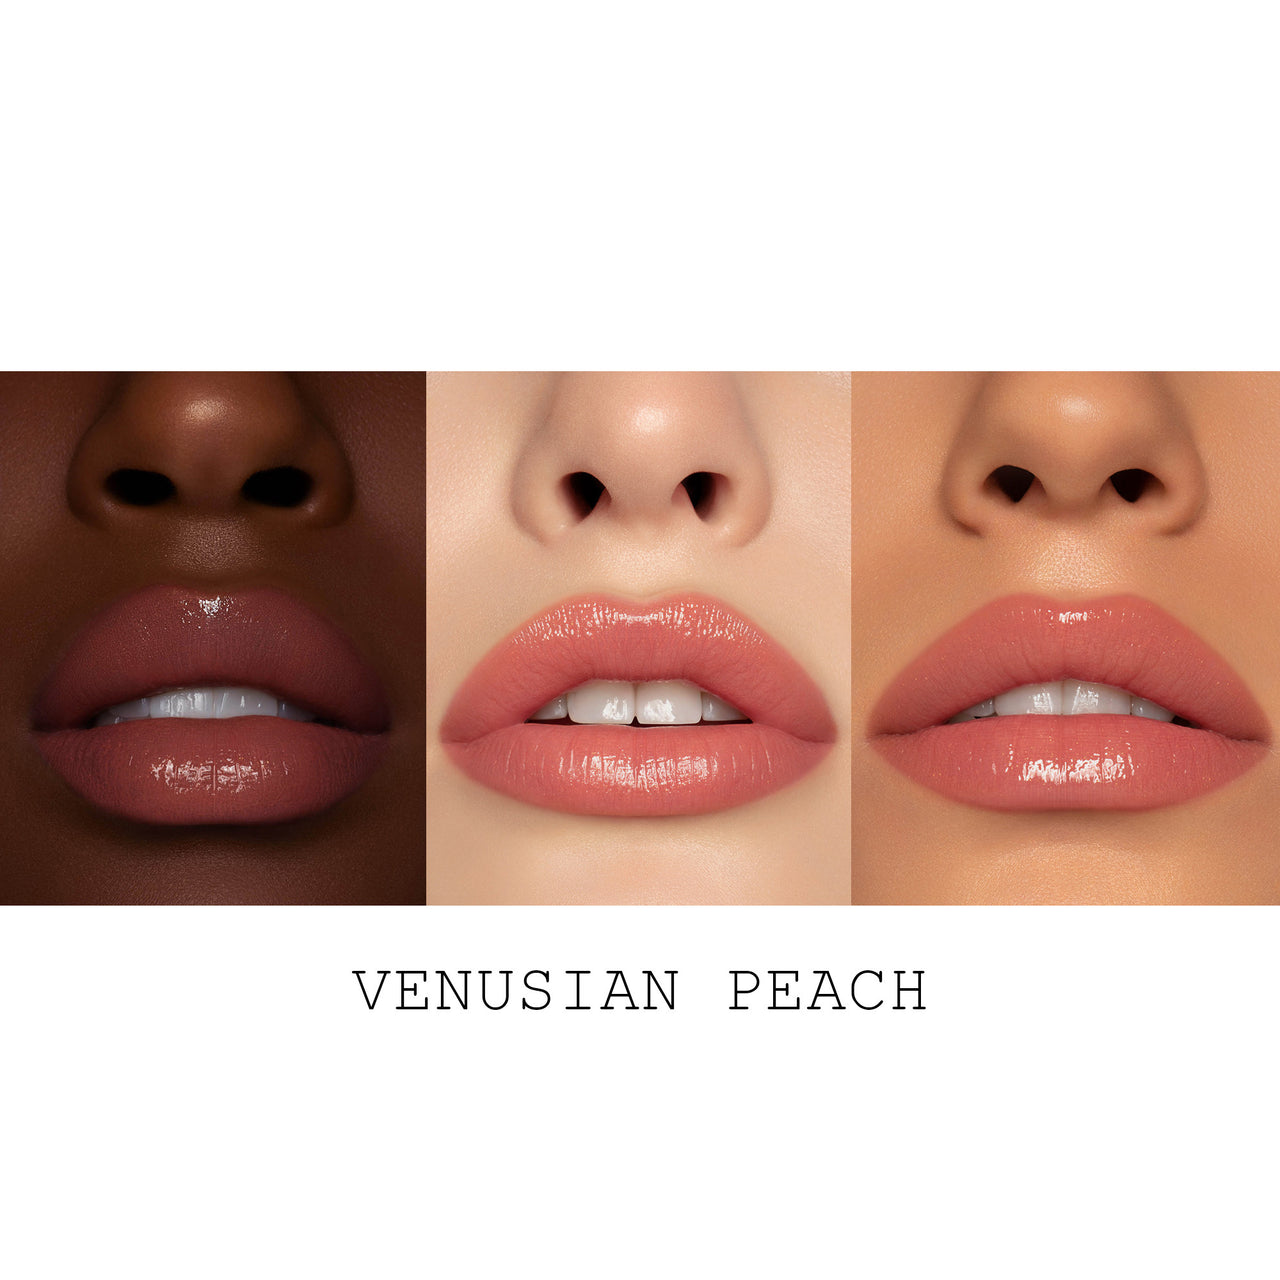 Pat Mcgrath Labs "Venusian Peach" Bridgerton Satin Allure Lipstick